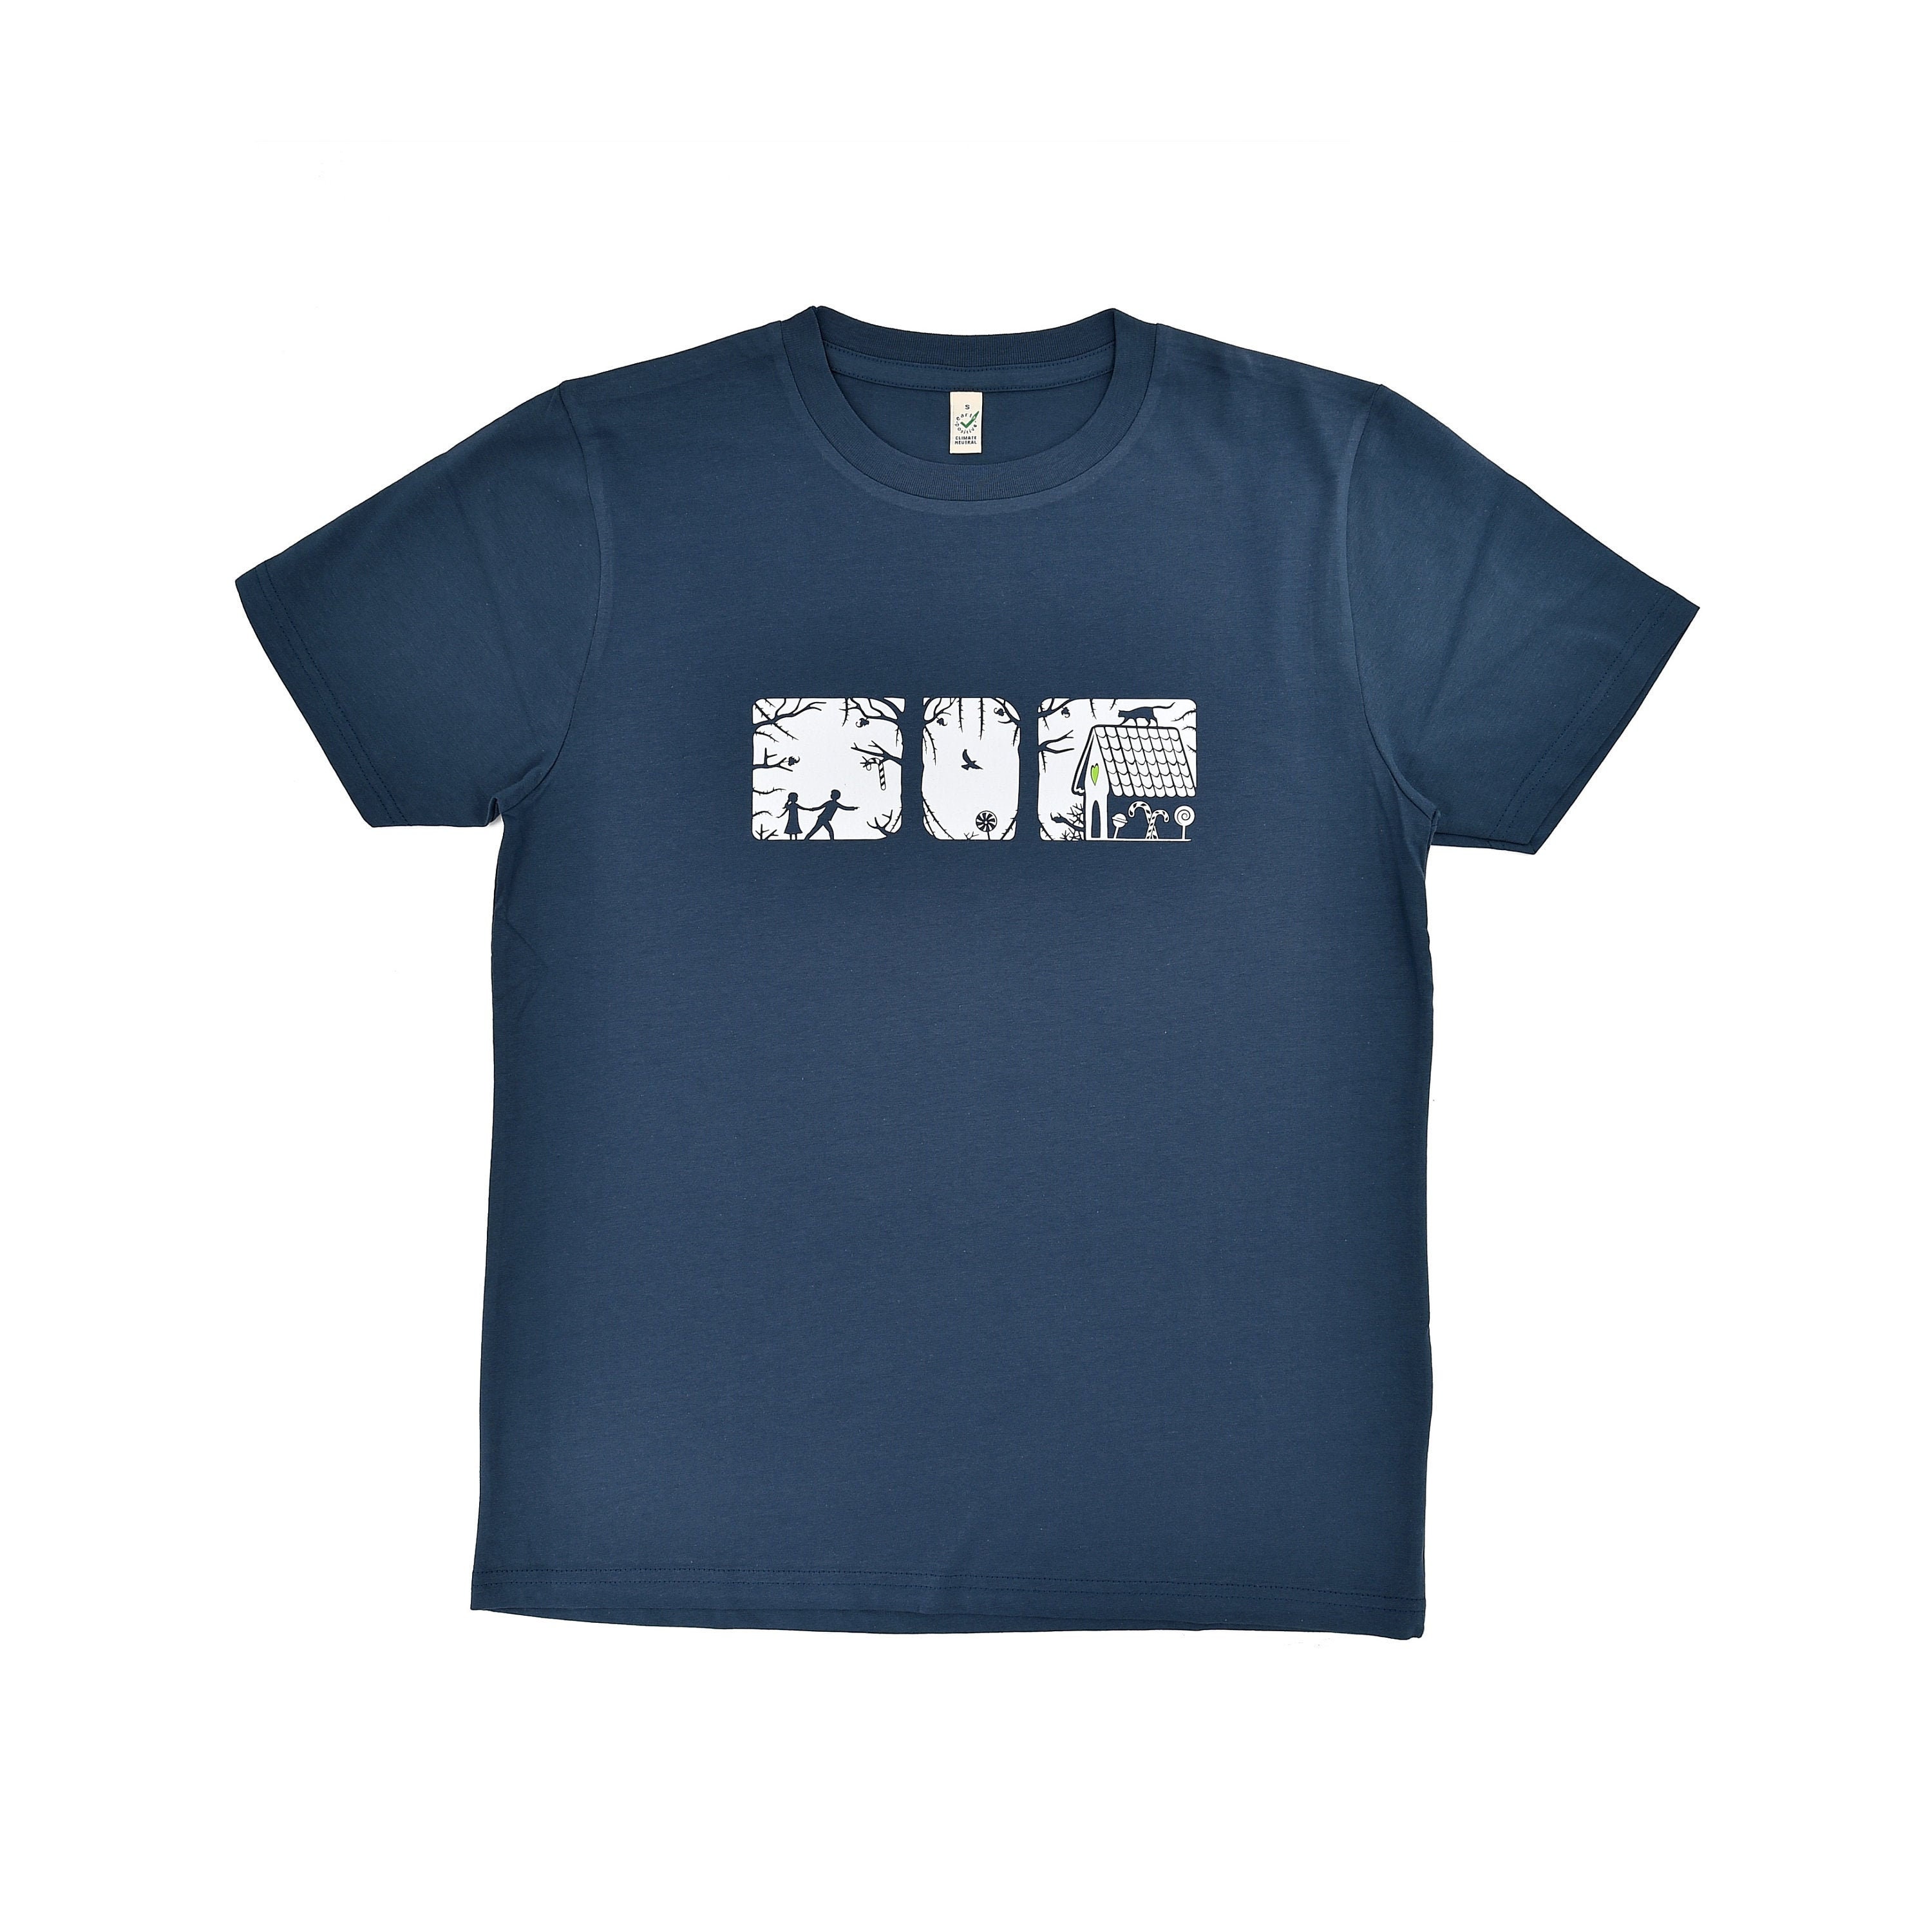 Hansel & Gretel Men's Organic Cotton T-shirt Blue - Etsy